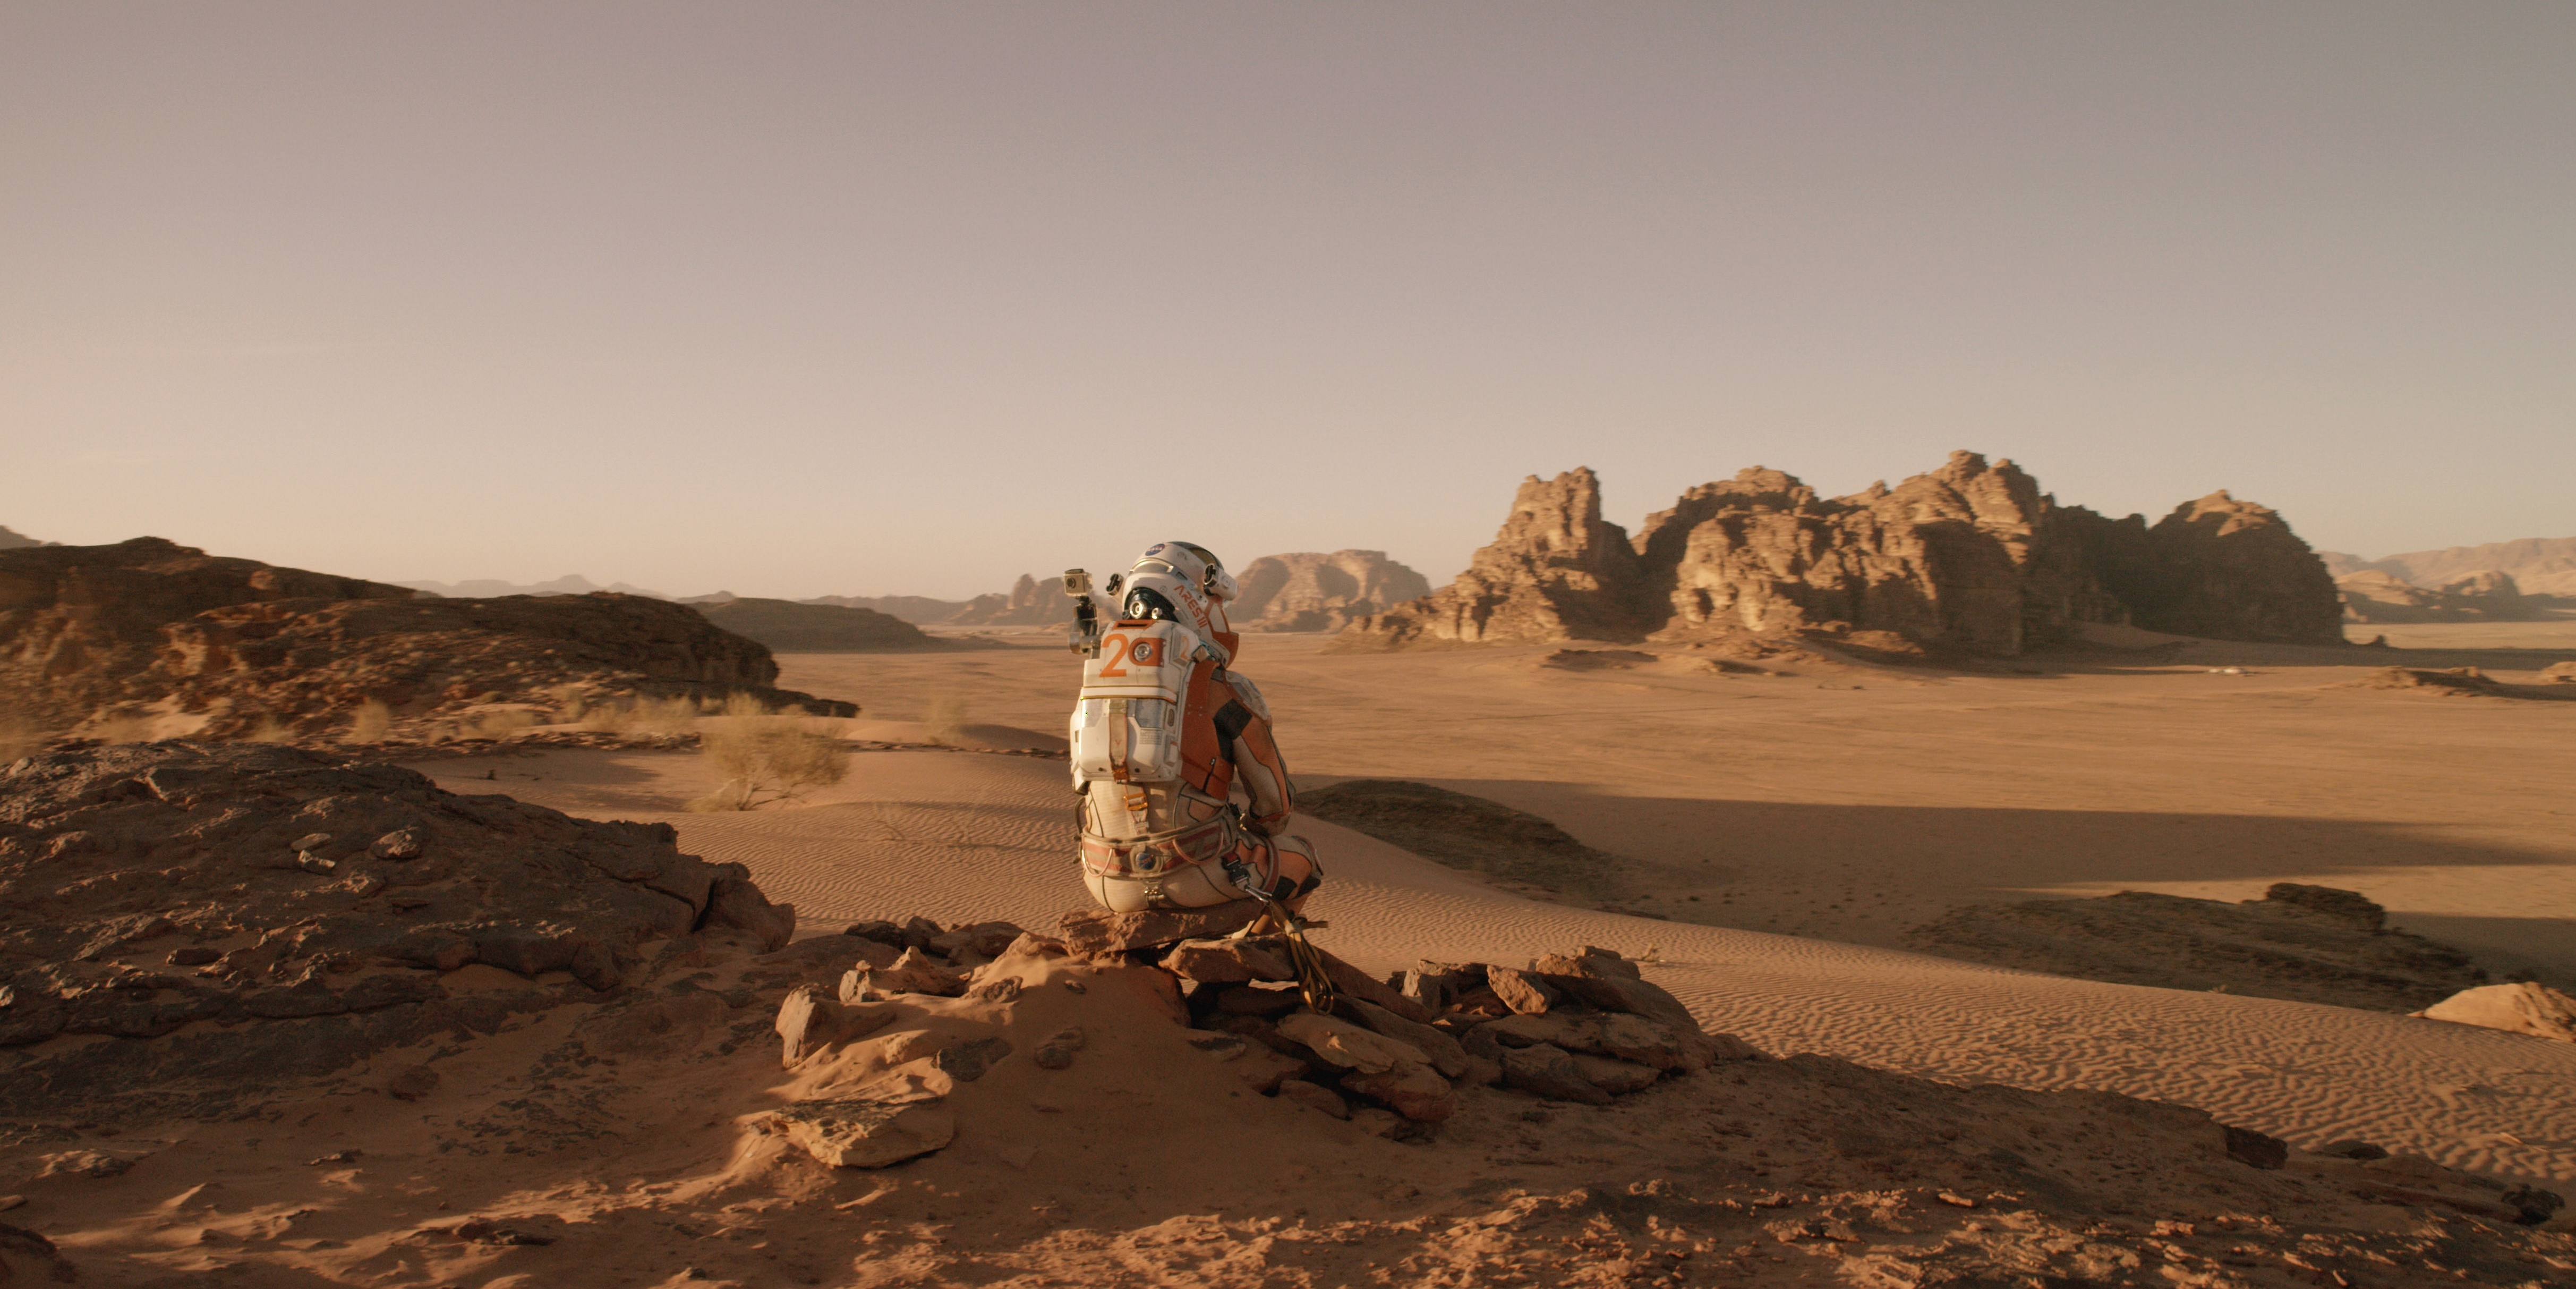 Descargar fondos de escritorio de Marte (The Martian) HD